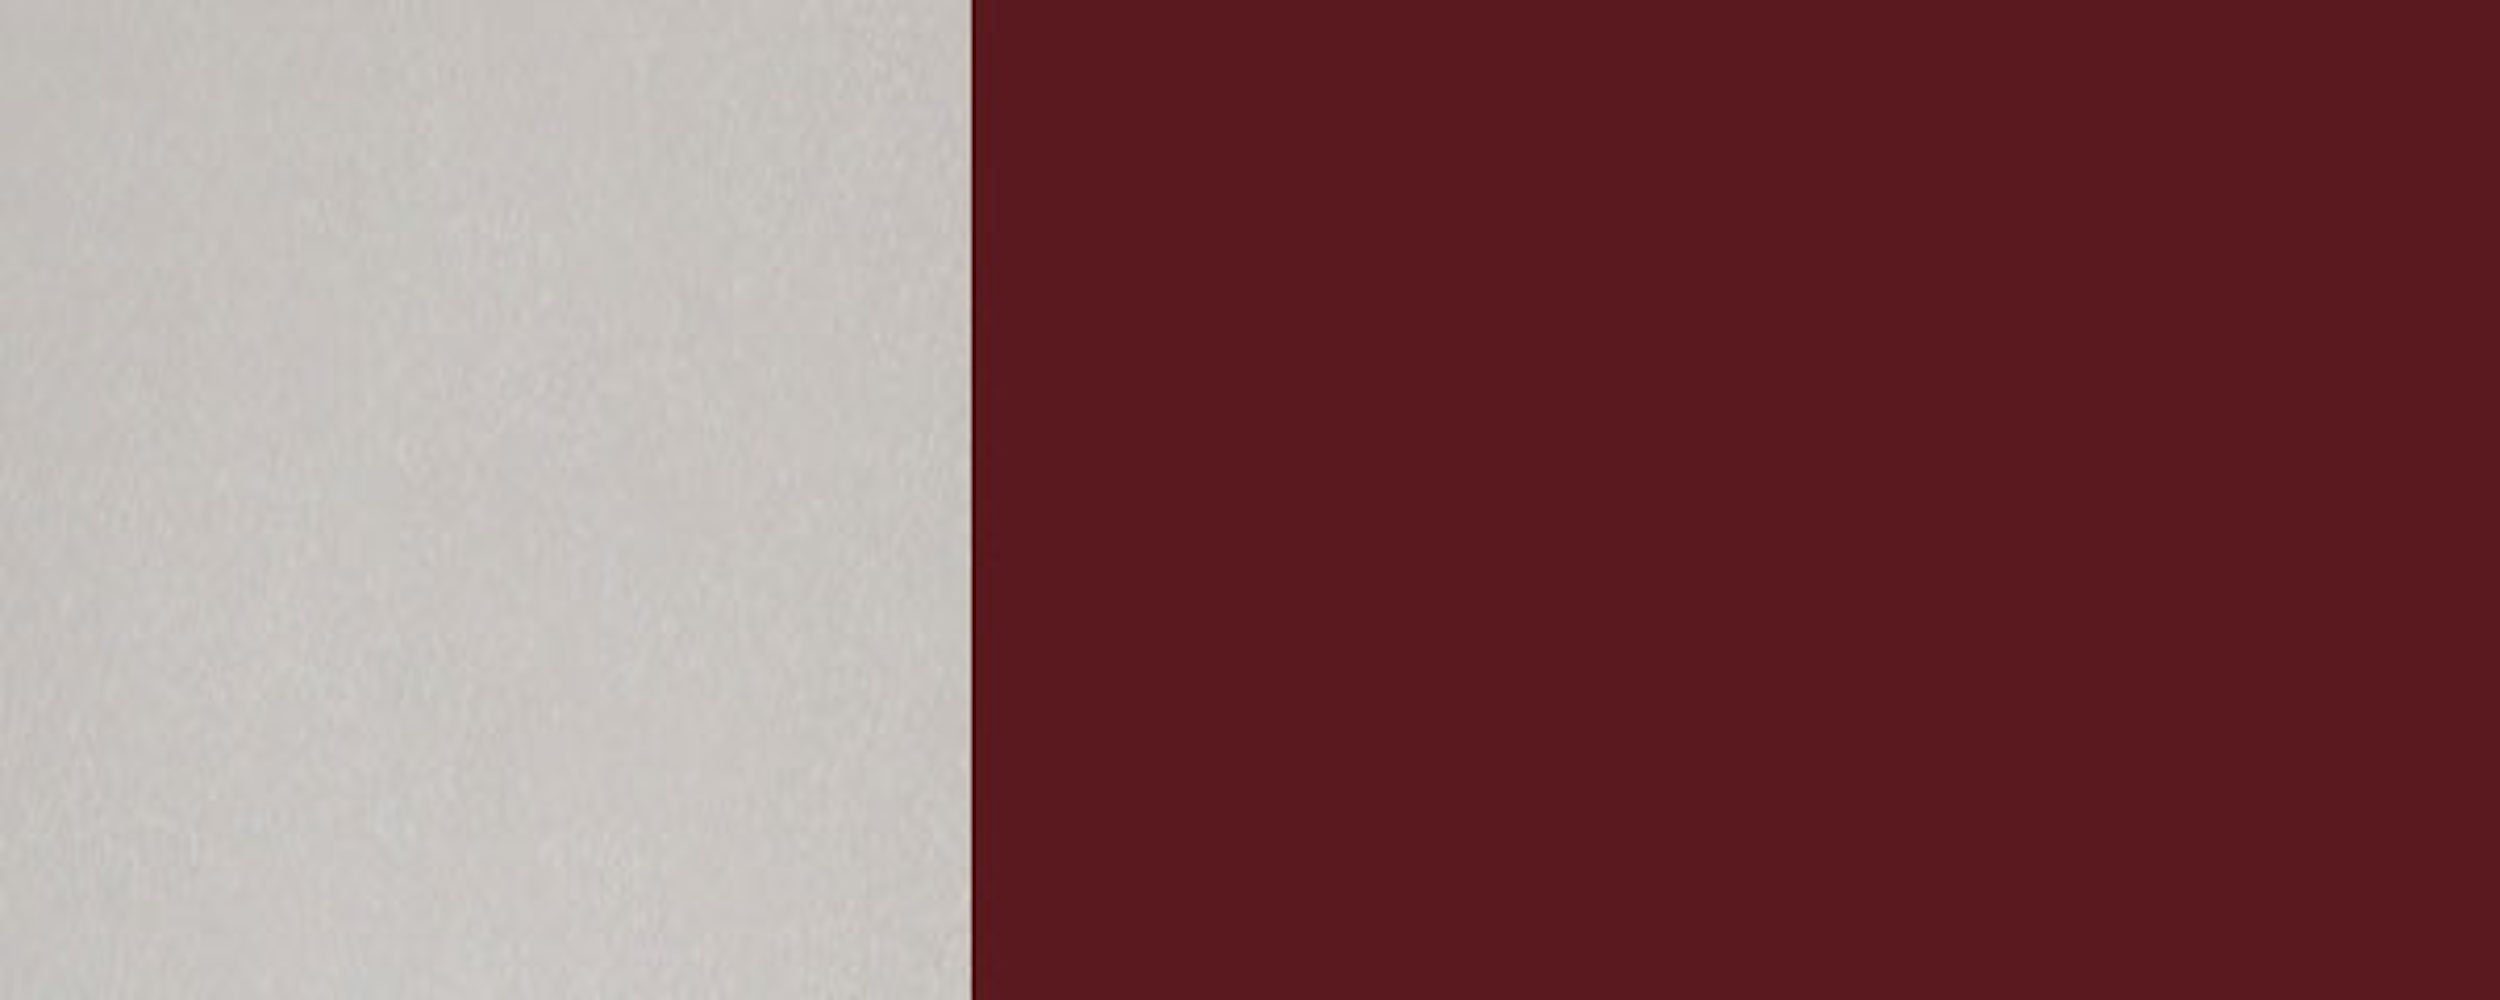 grifflos Soft-Close-Funktion Hochglanz 2-türig 3005 60cm (Florence) RAL Korpusfarbe Feldmann-Wohnen weinrot Florence wählbar Unterschrank & Front-